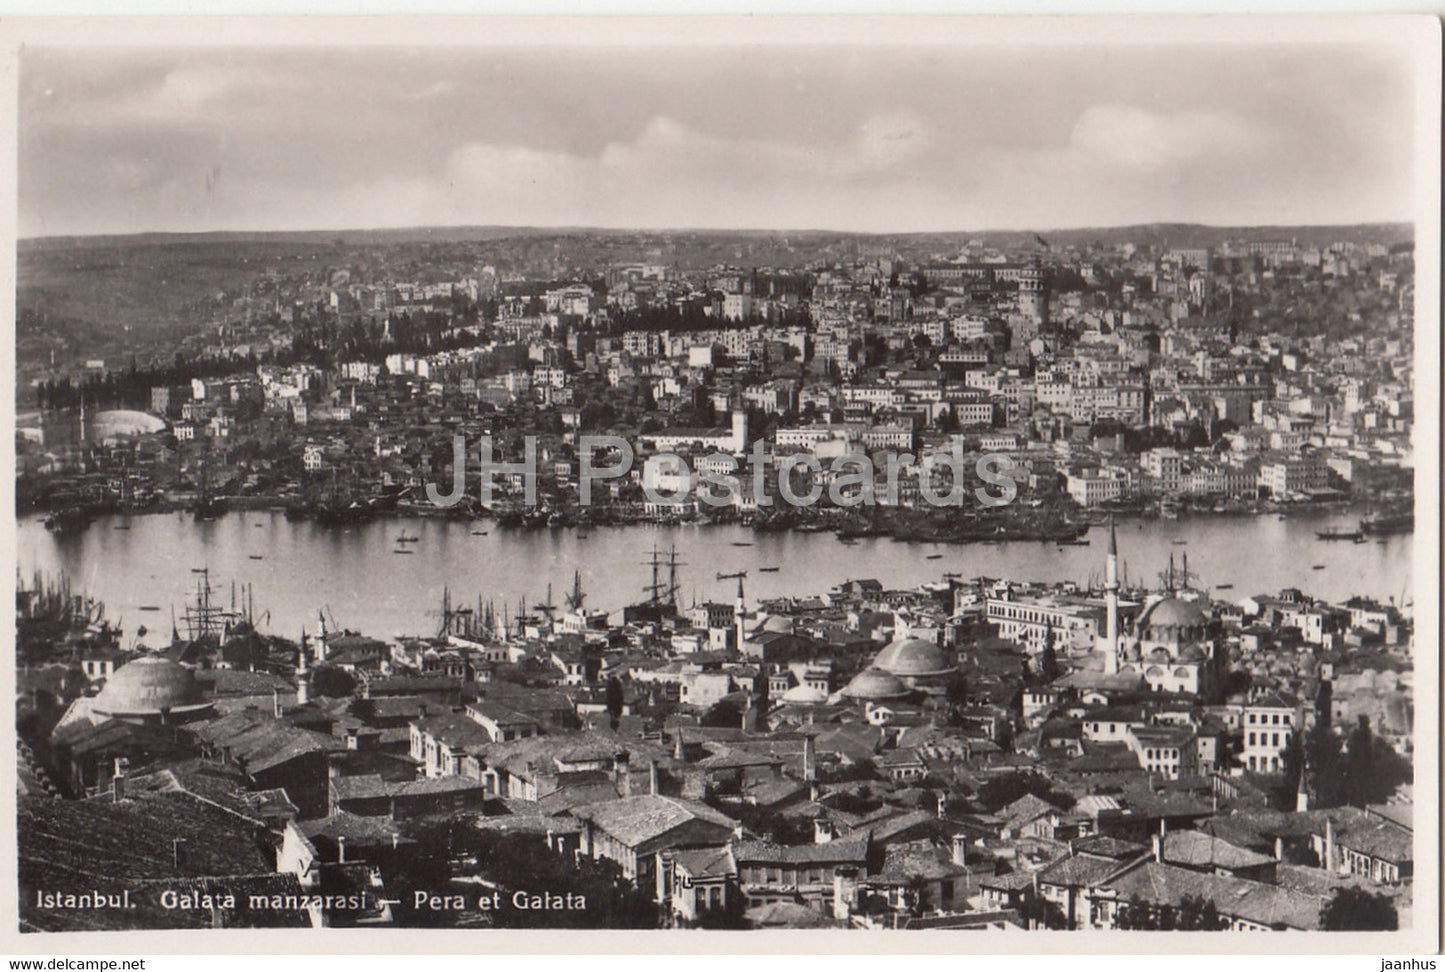 Istanbul - Pera et Galata - general view - old postcard - Turkey - unused - JH Postcards